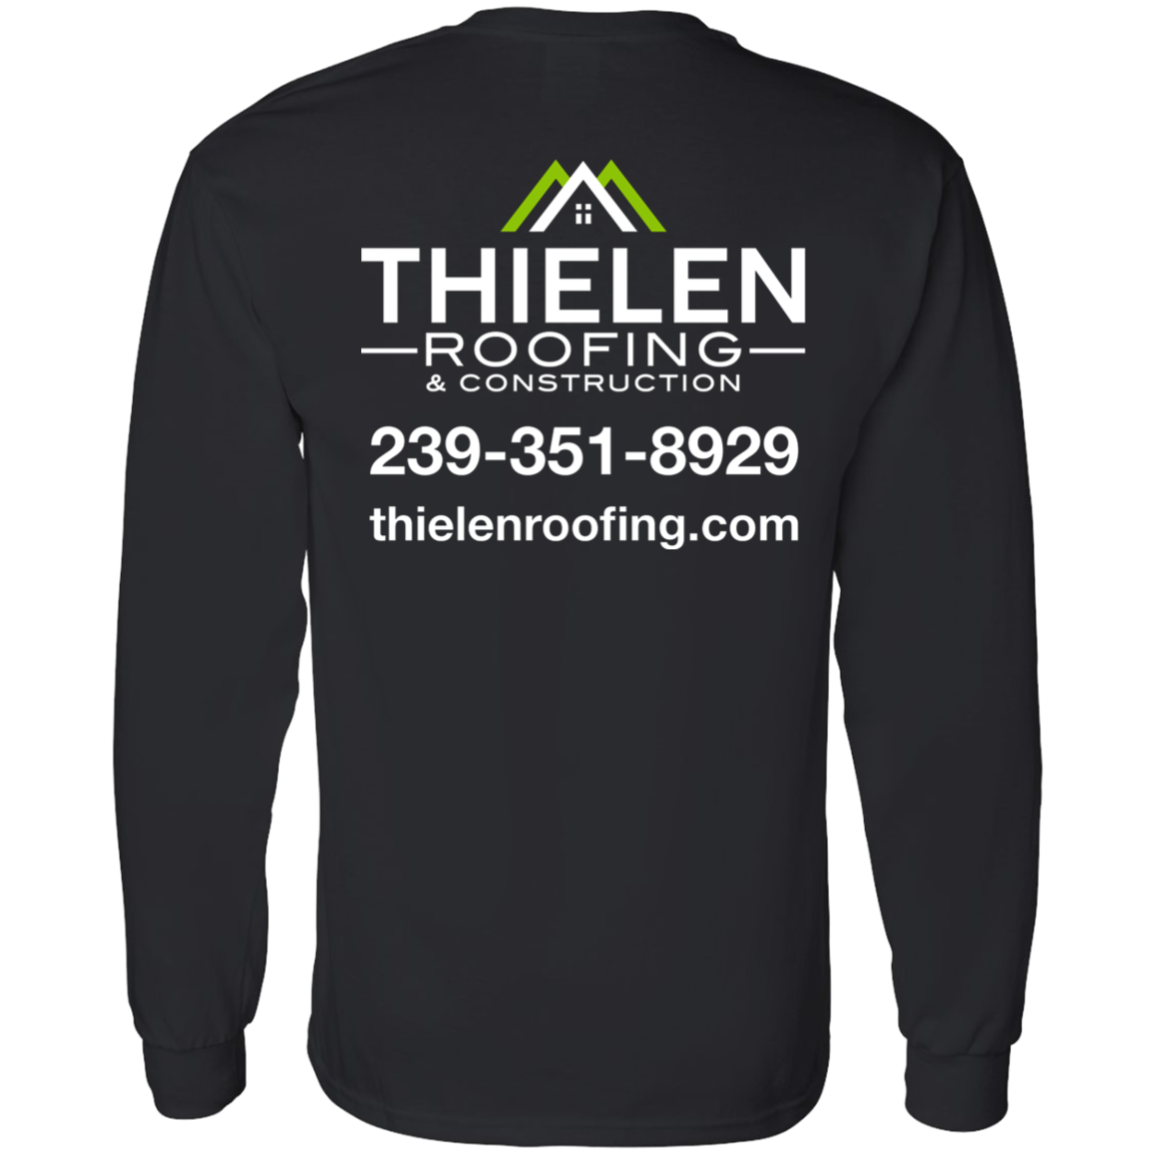 THIELEN ROOFING - LS T-Shirt 5.3 oz.